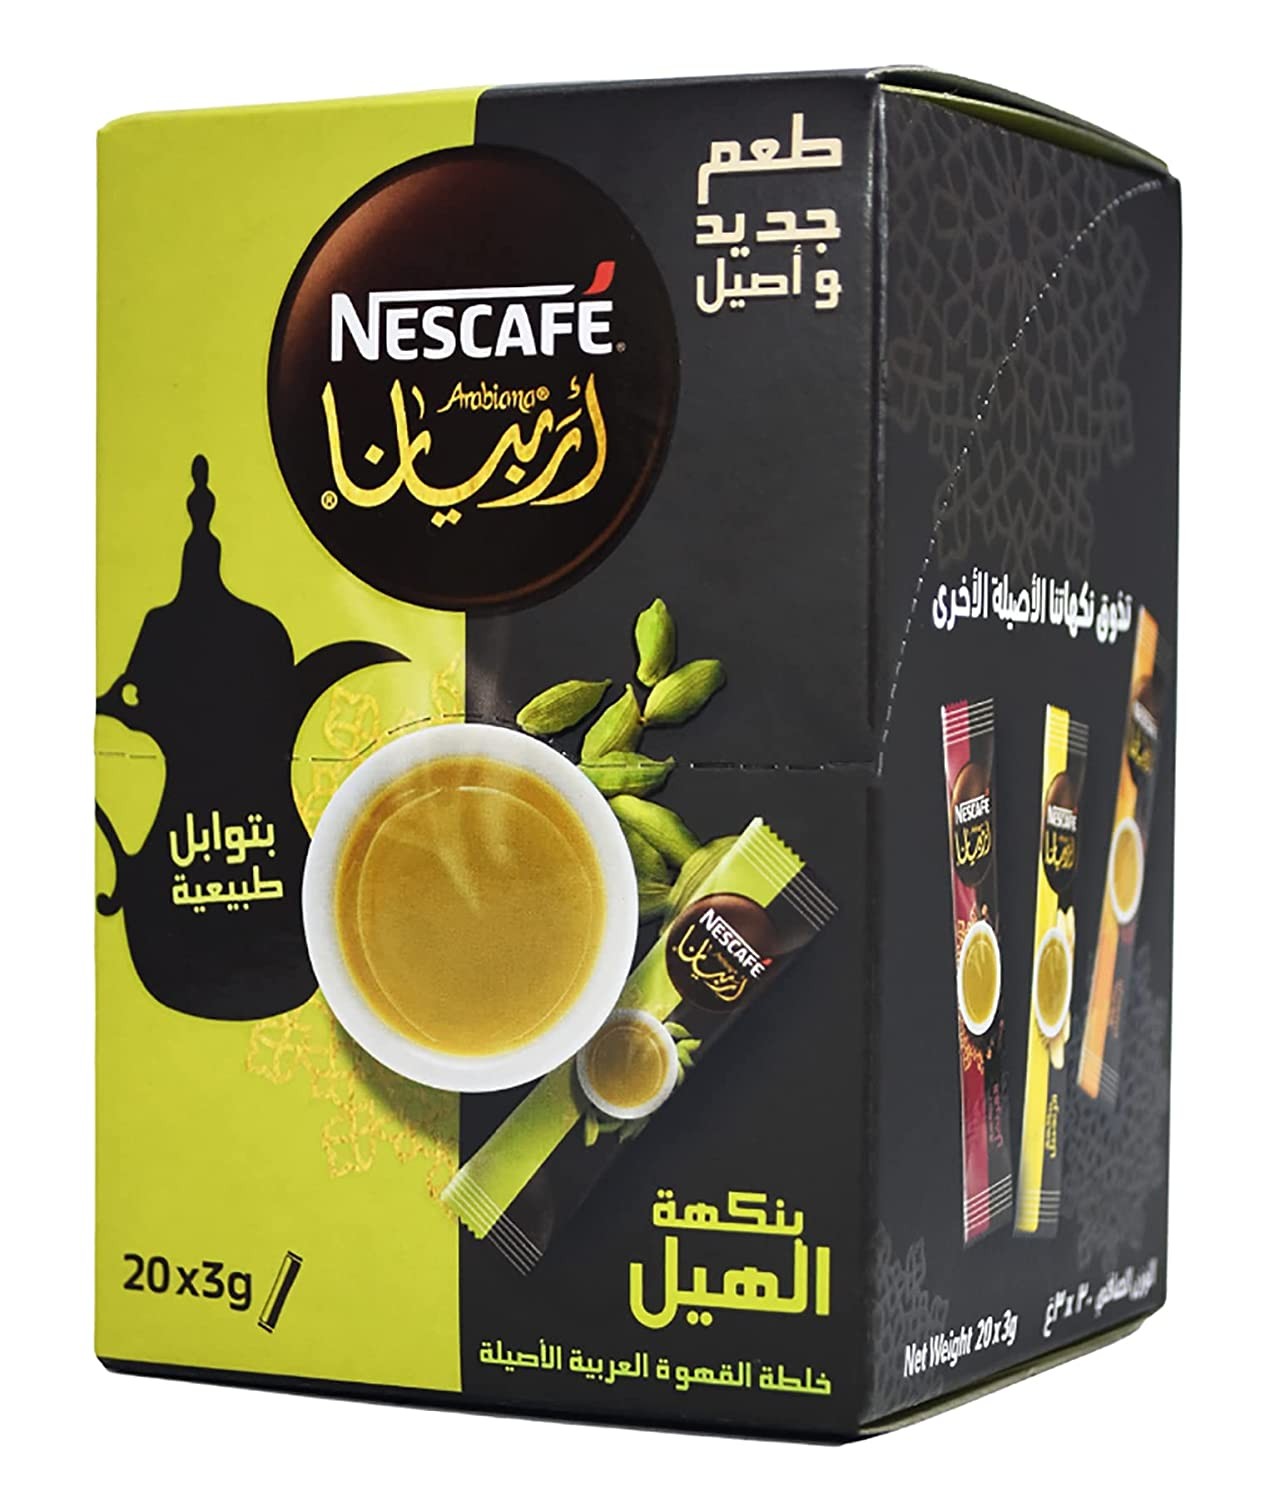  Nestle Nescafe Cardamom Flavored Arabic Coffee - 20 Sticks